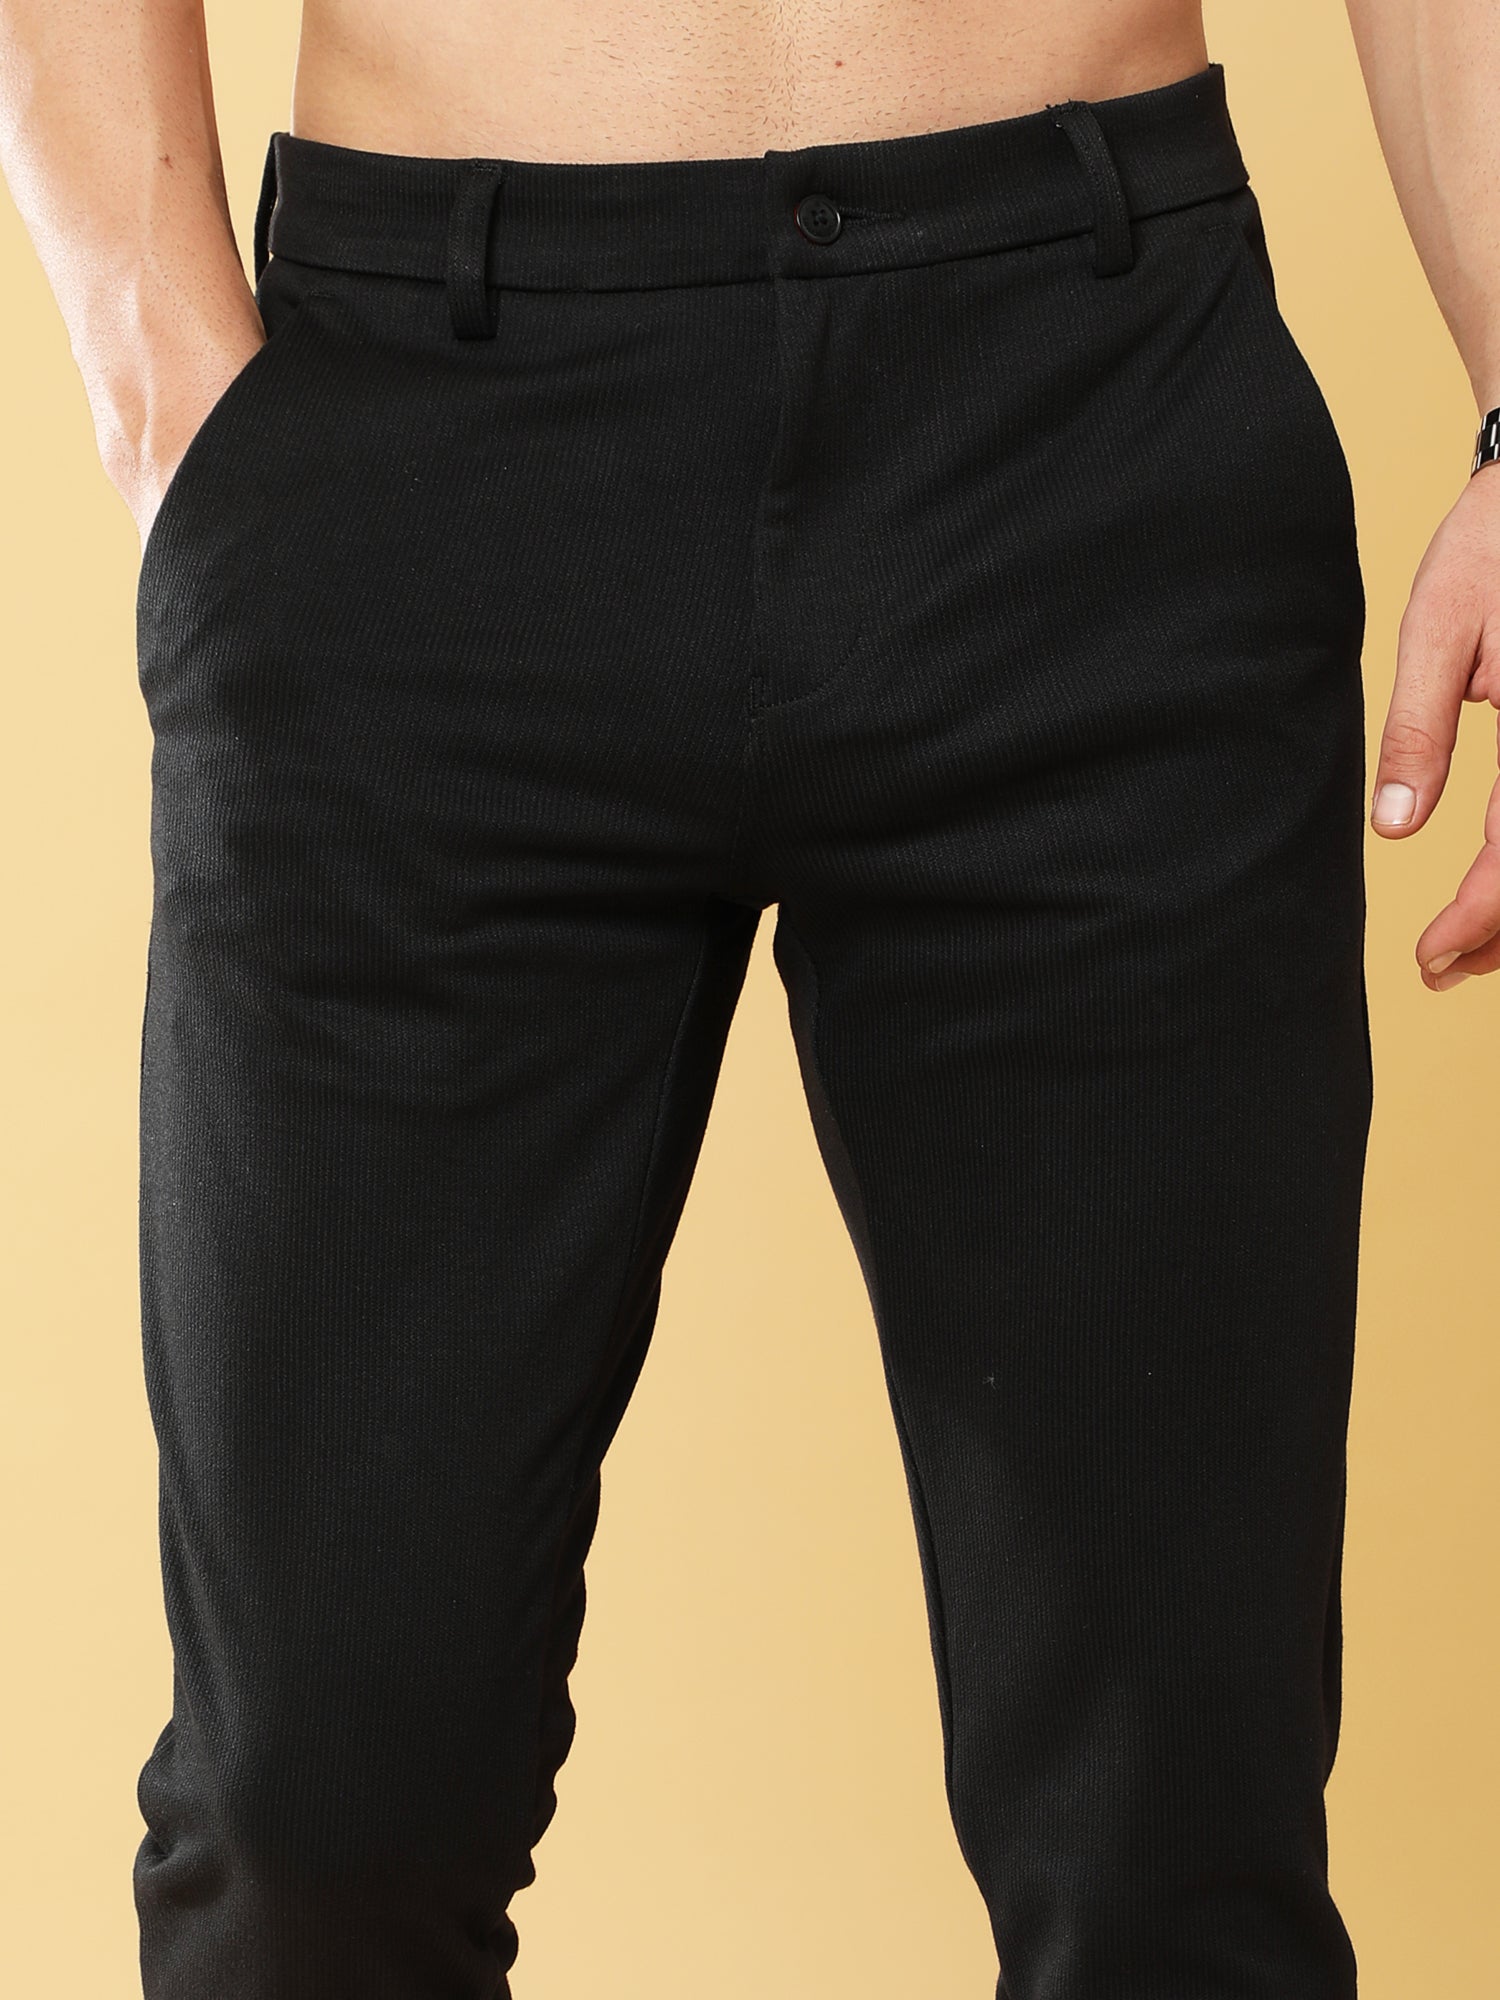 Jacquard Power Stretch Black Trouser